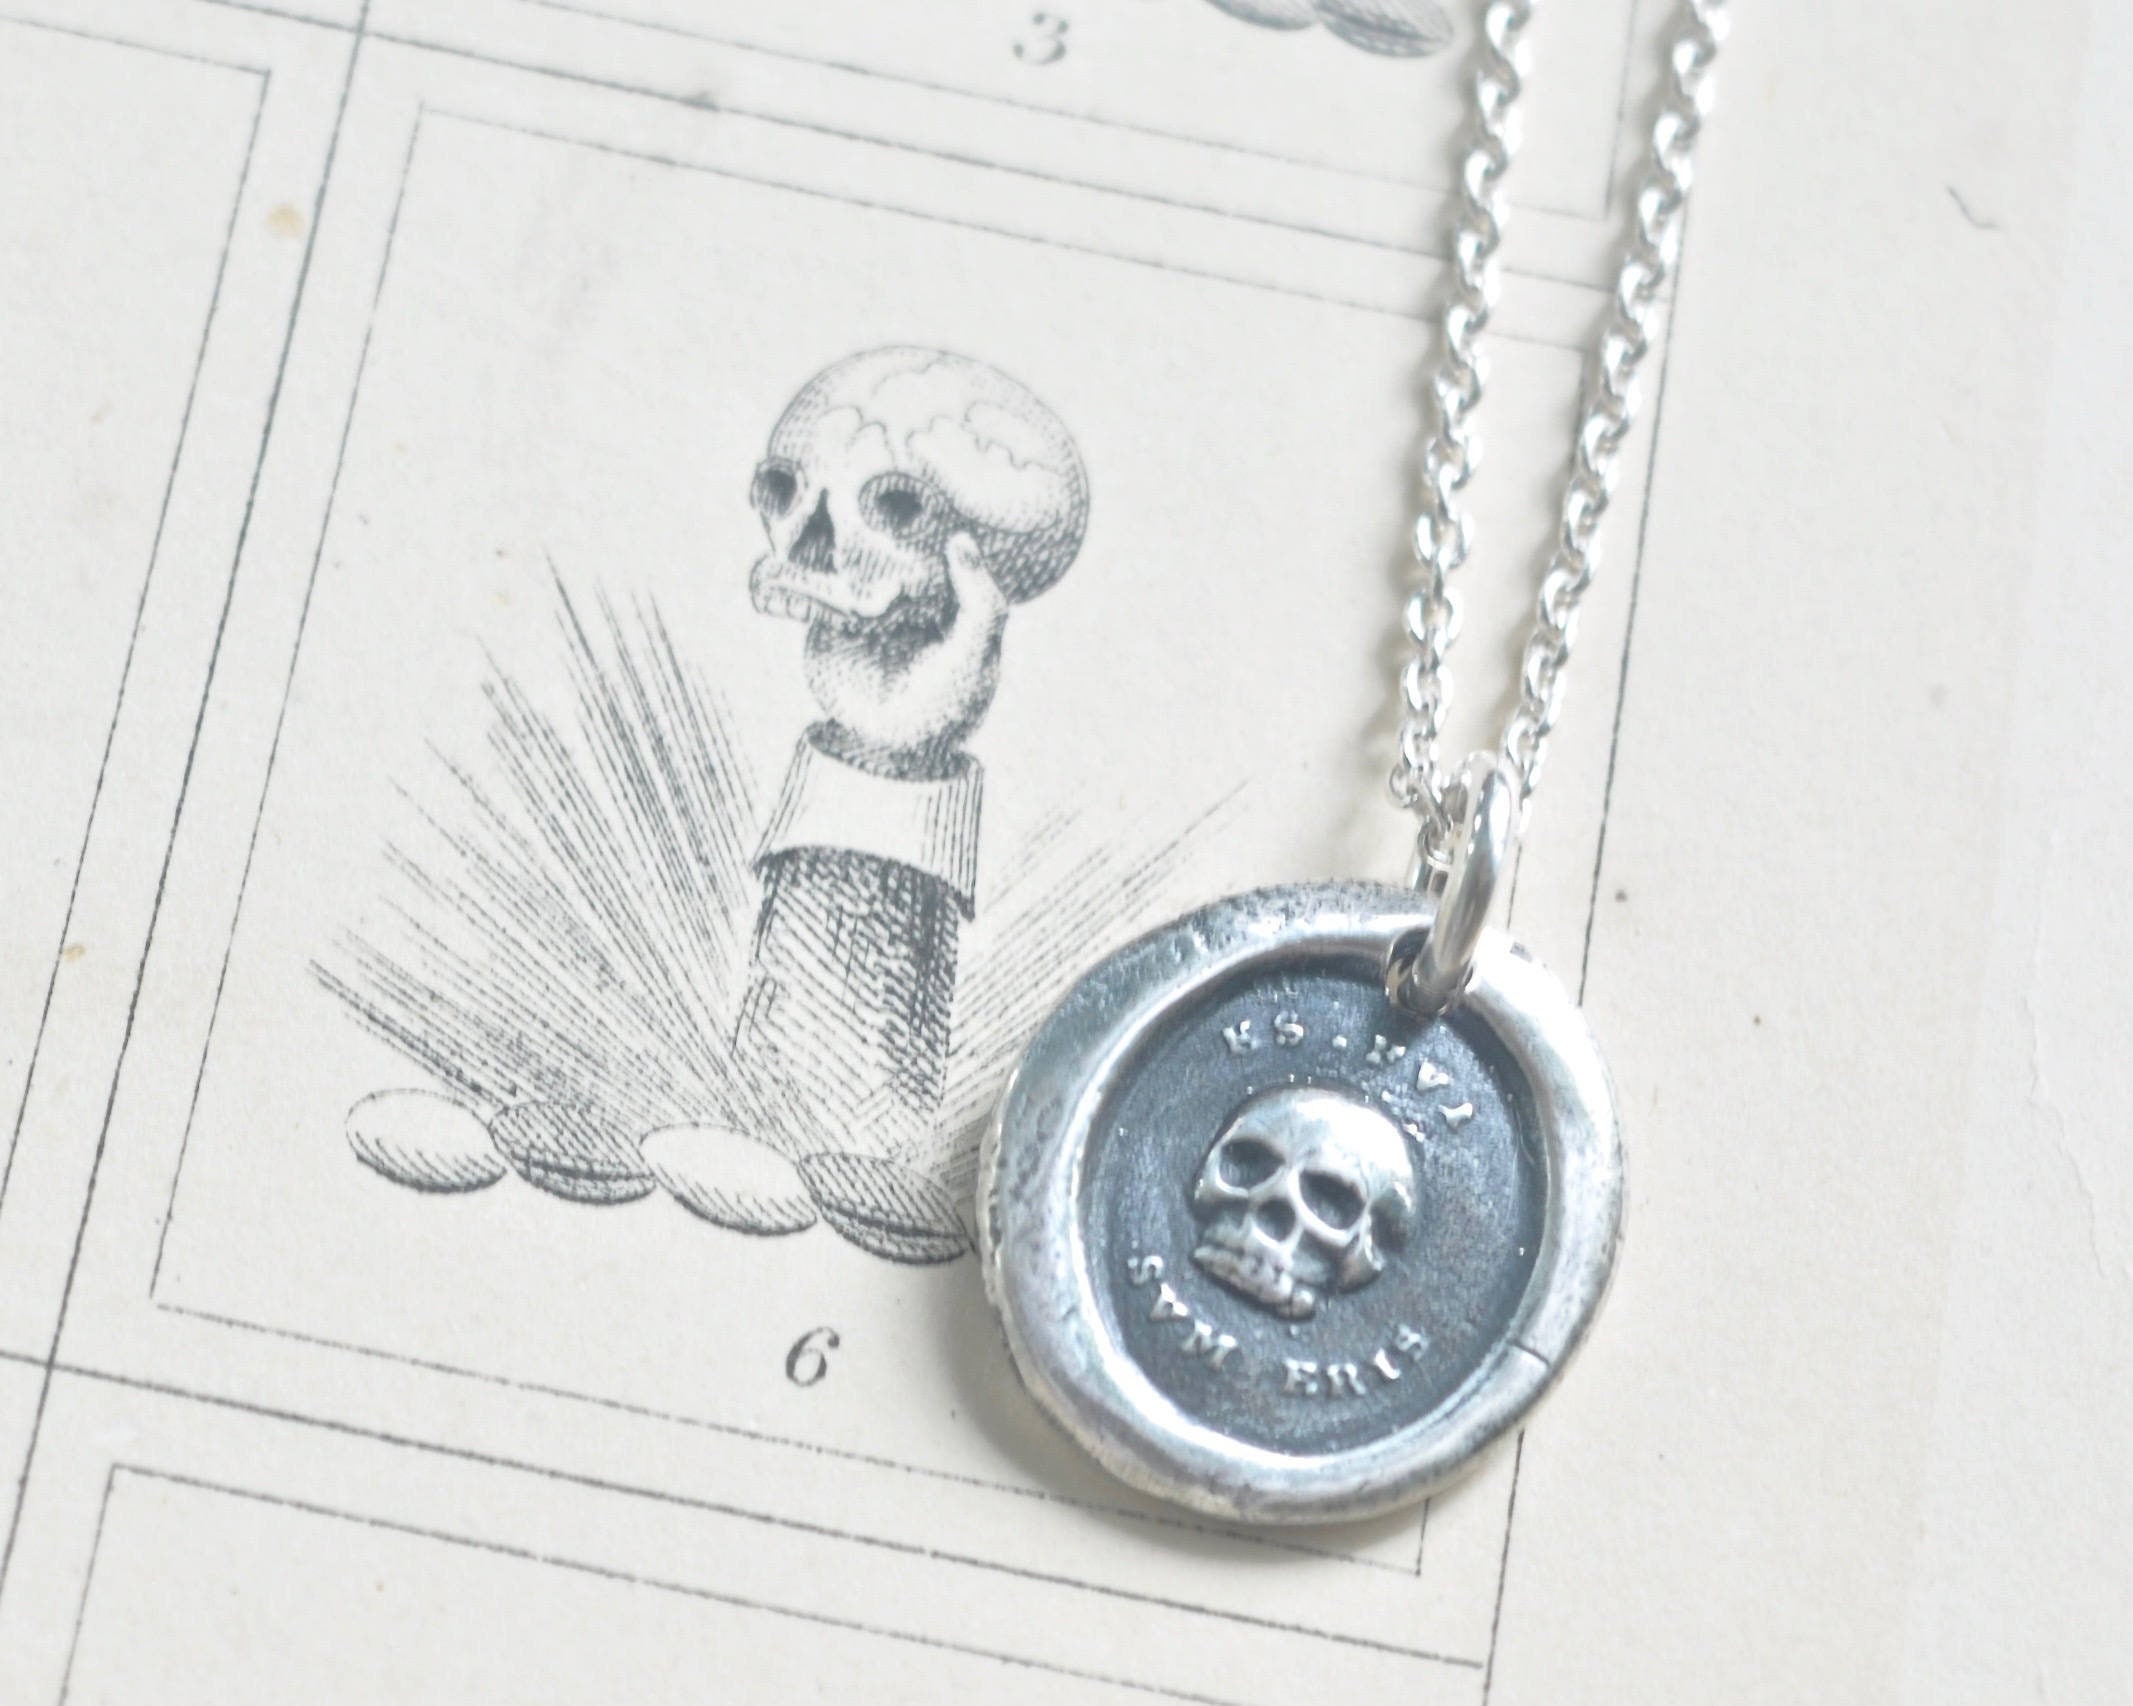 Jewelers Design Stamp Skull and Cross Bones Number 250 